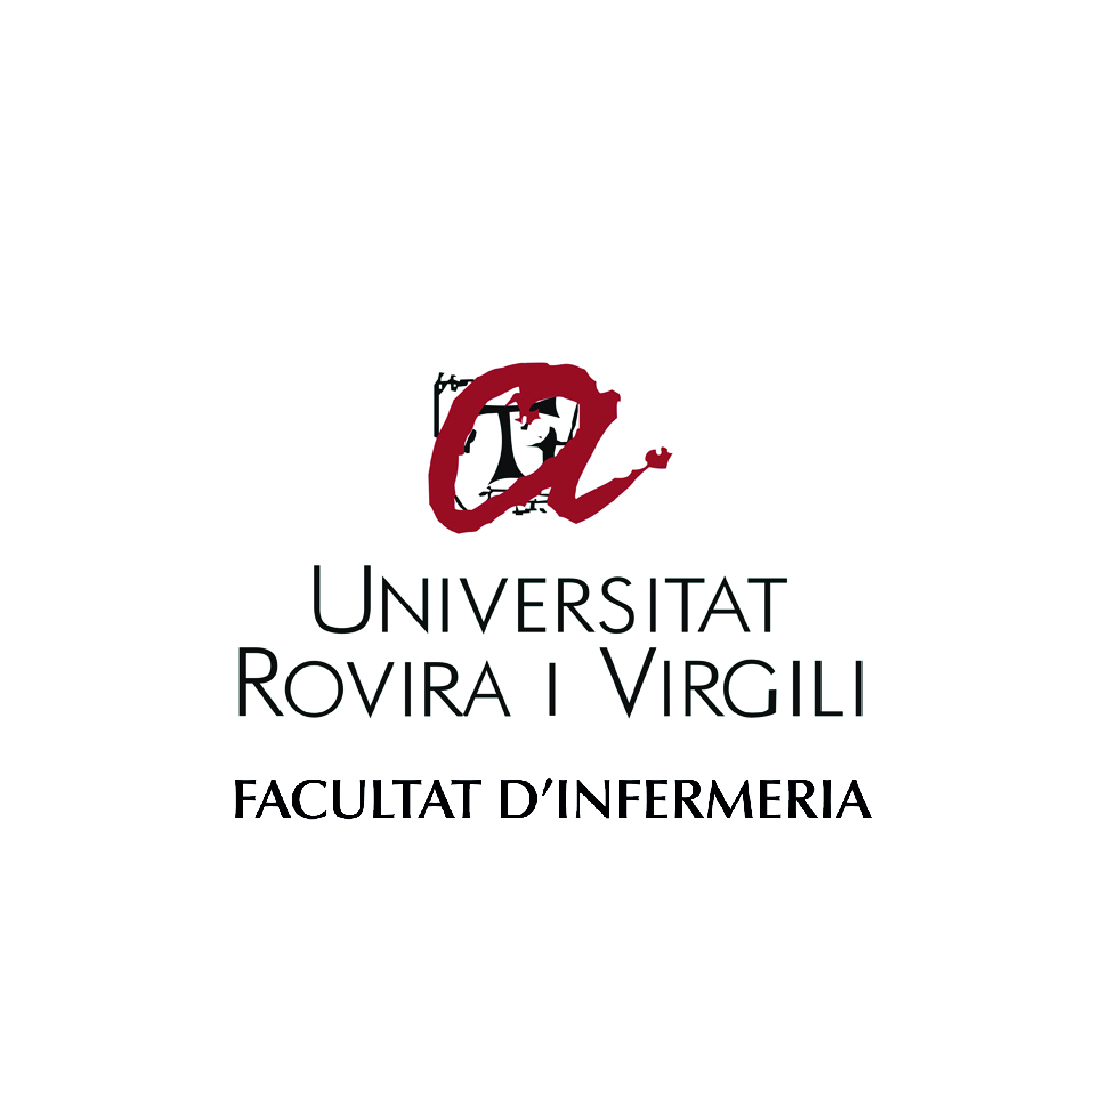 Universitat Rovira I Virgili